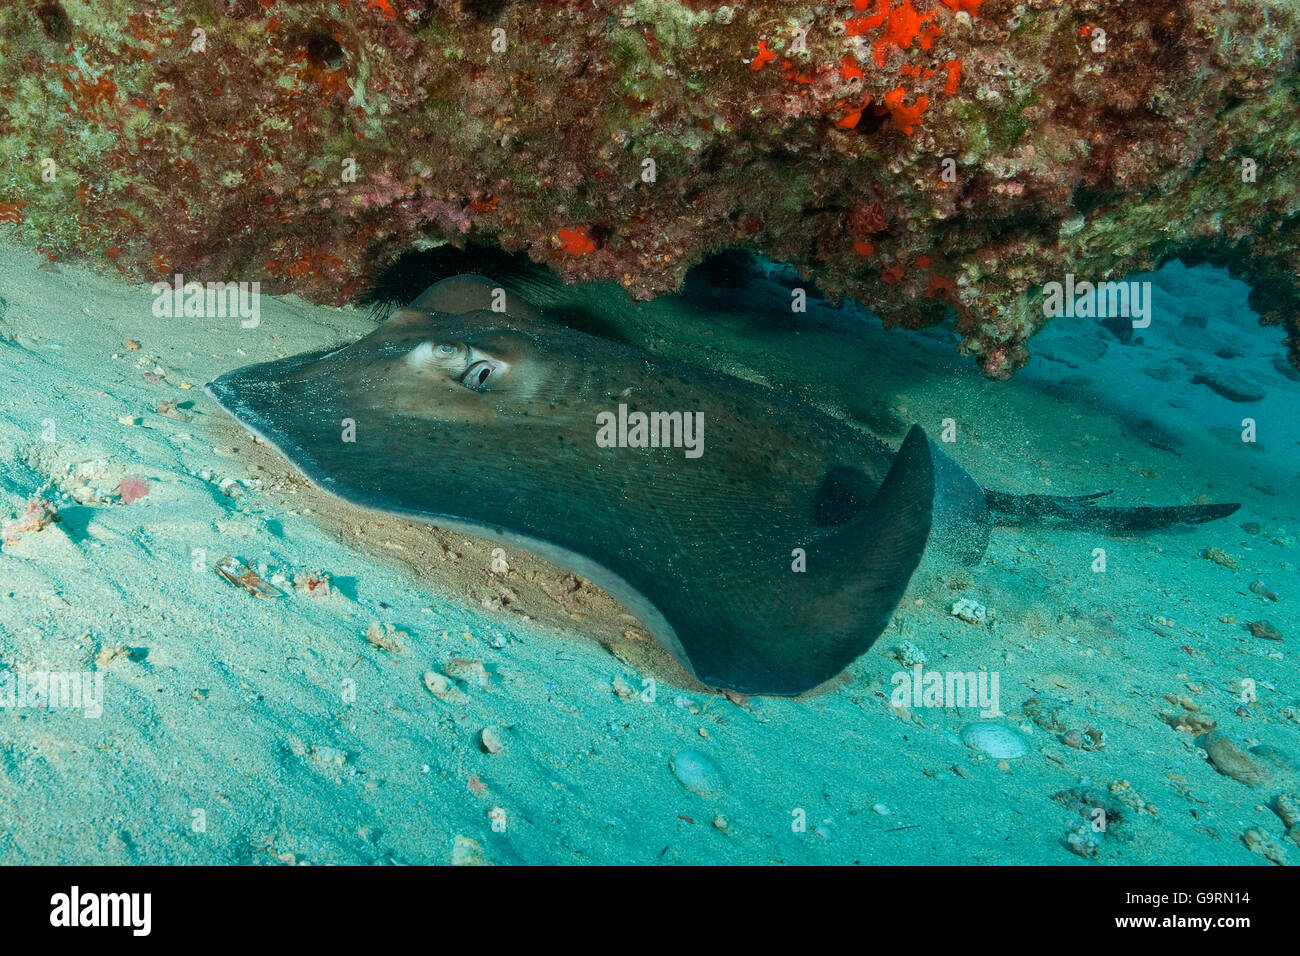 Atlantic stingray (Dasyatis sabina) Stock Photo